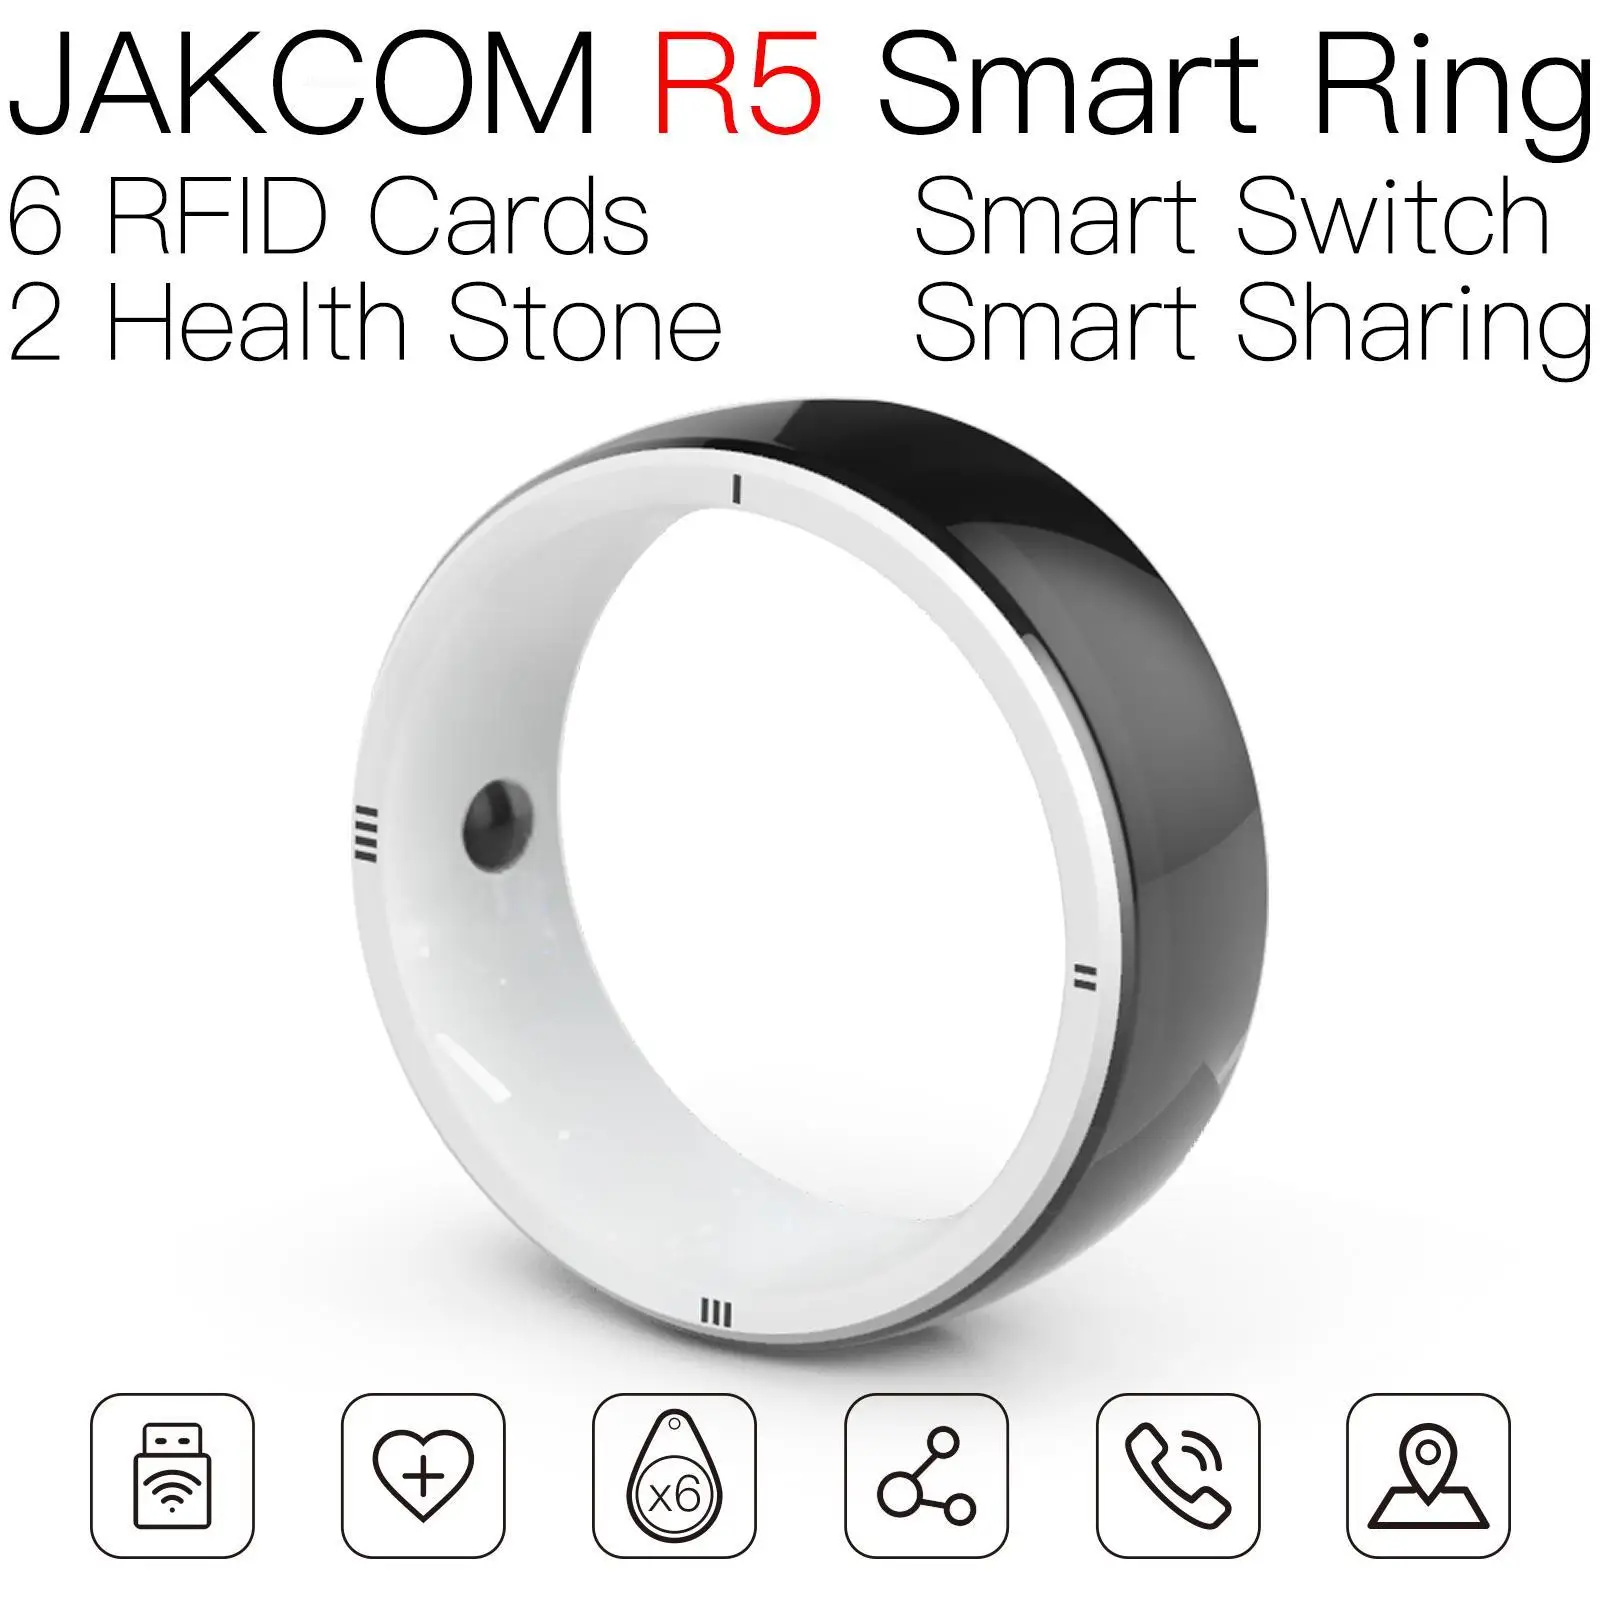 

JAKCOM R5 Smart Ring better than carte lico window face id jordan 4 black cat nfc tag 215 square in chip